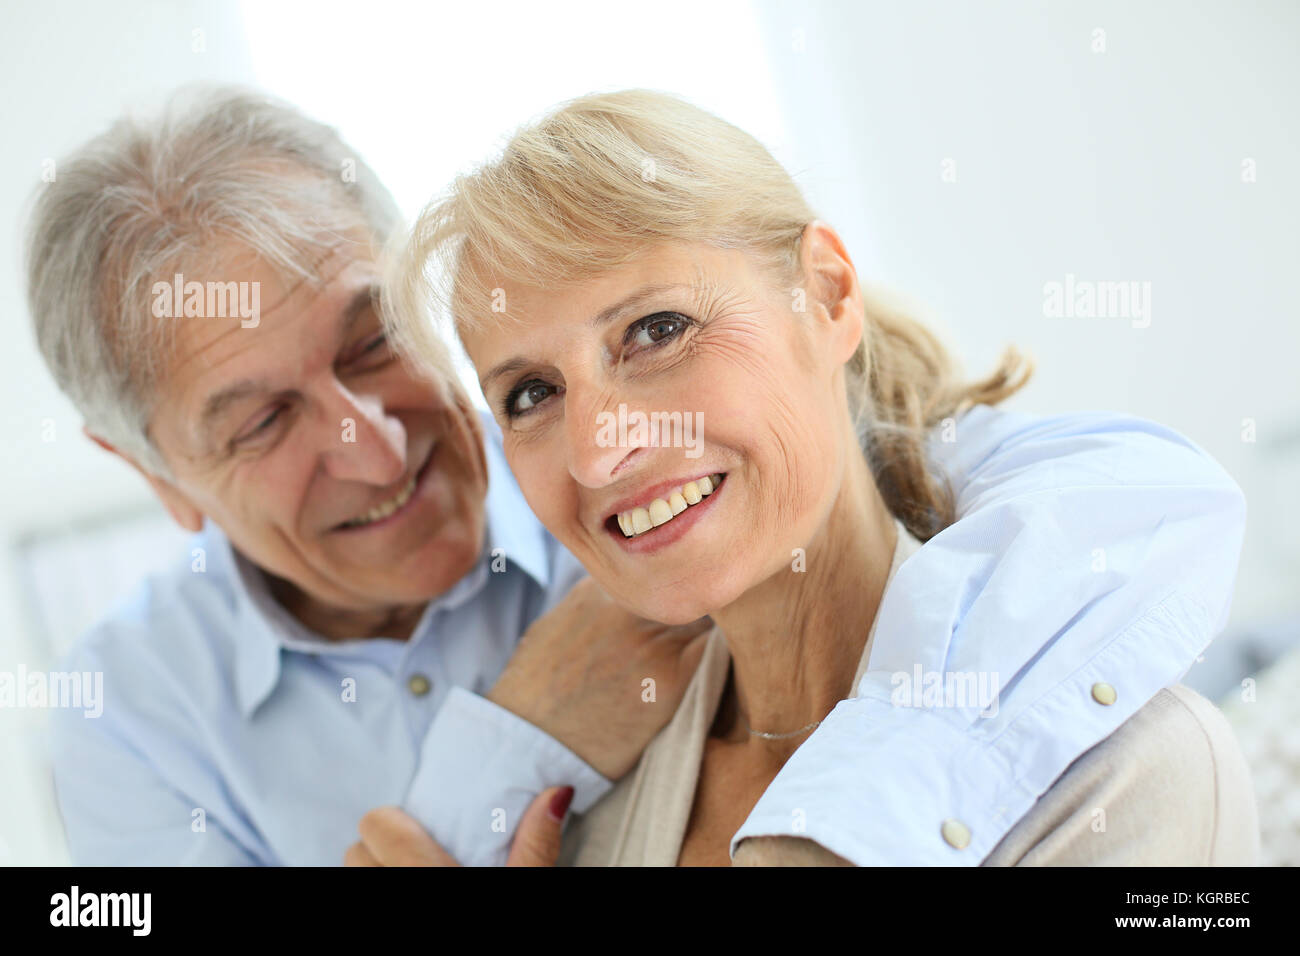 happy senior man embracing his wife Stock Photo